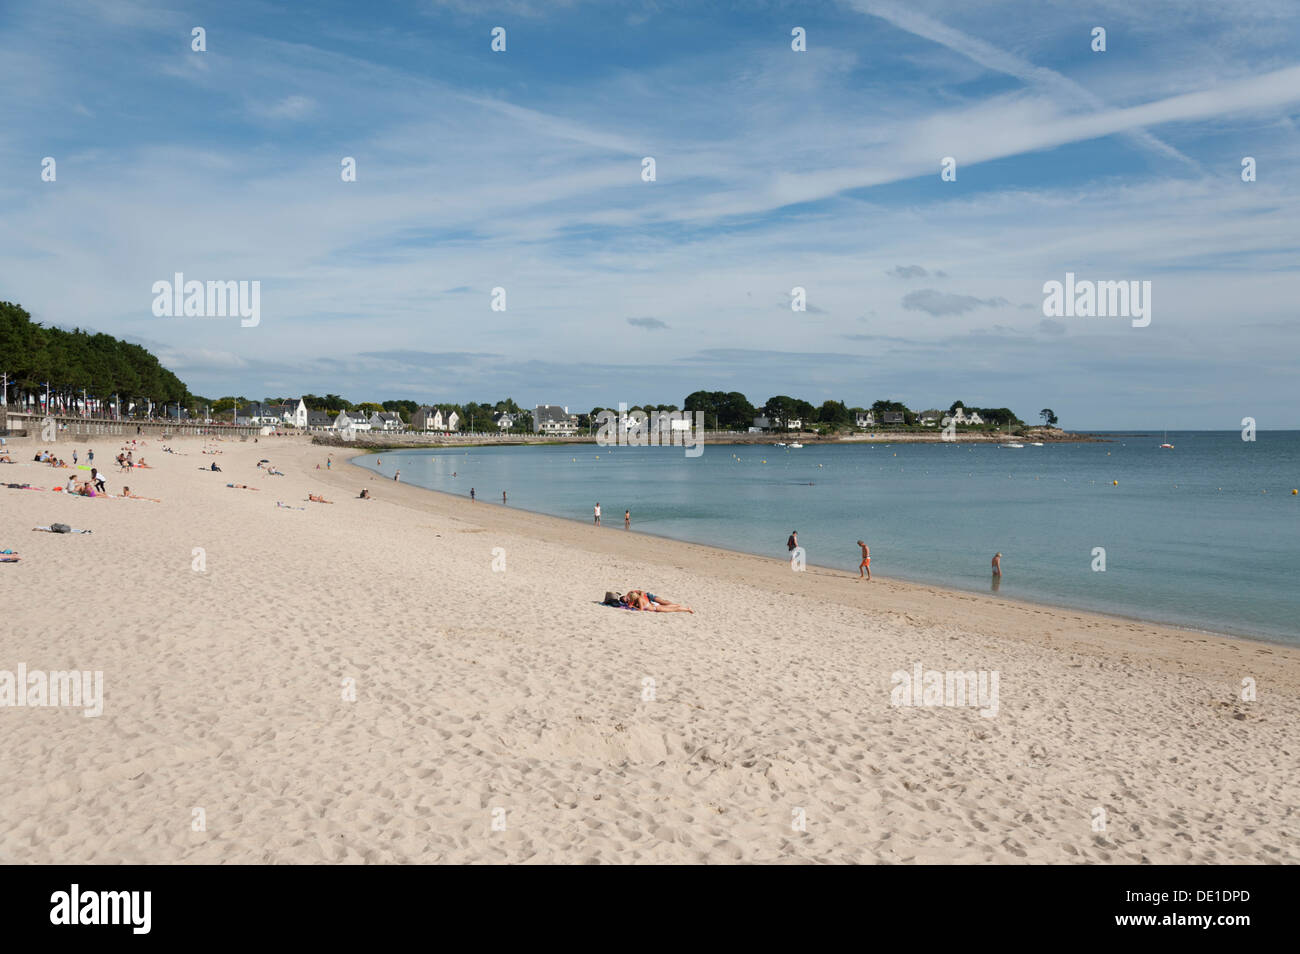 La plage de Benodet Bretagne France Banque D'Images